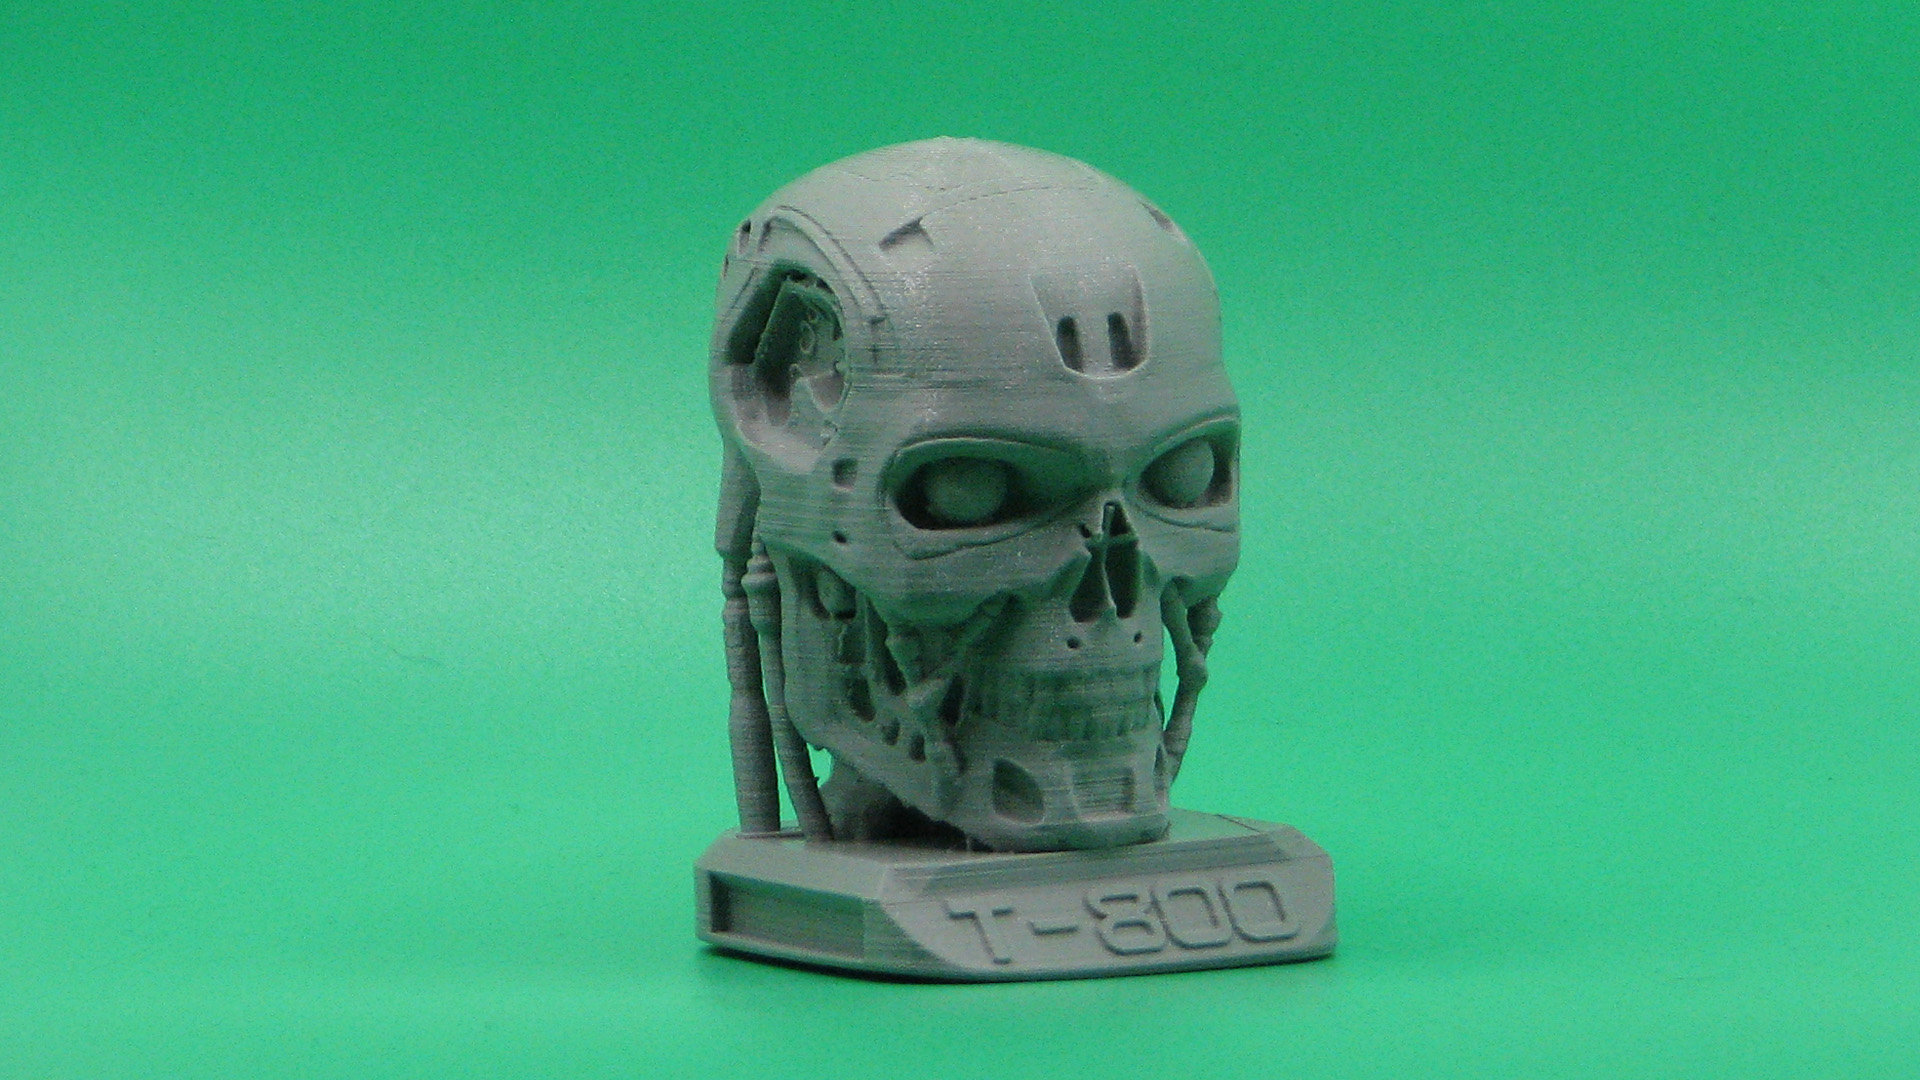 3D printed Terminator head